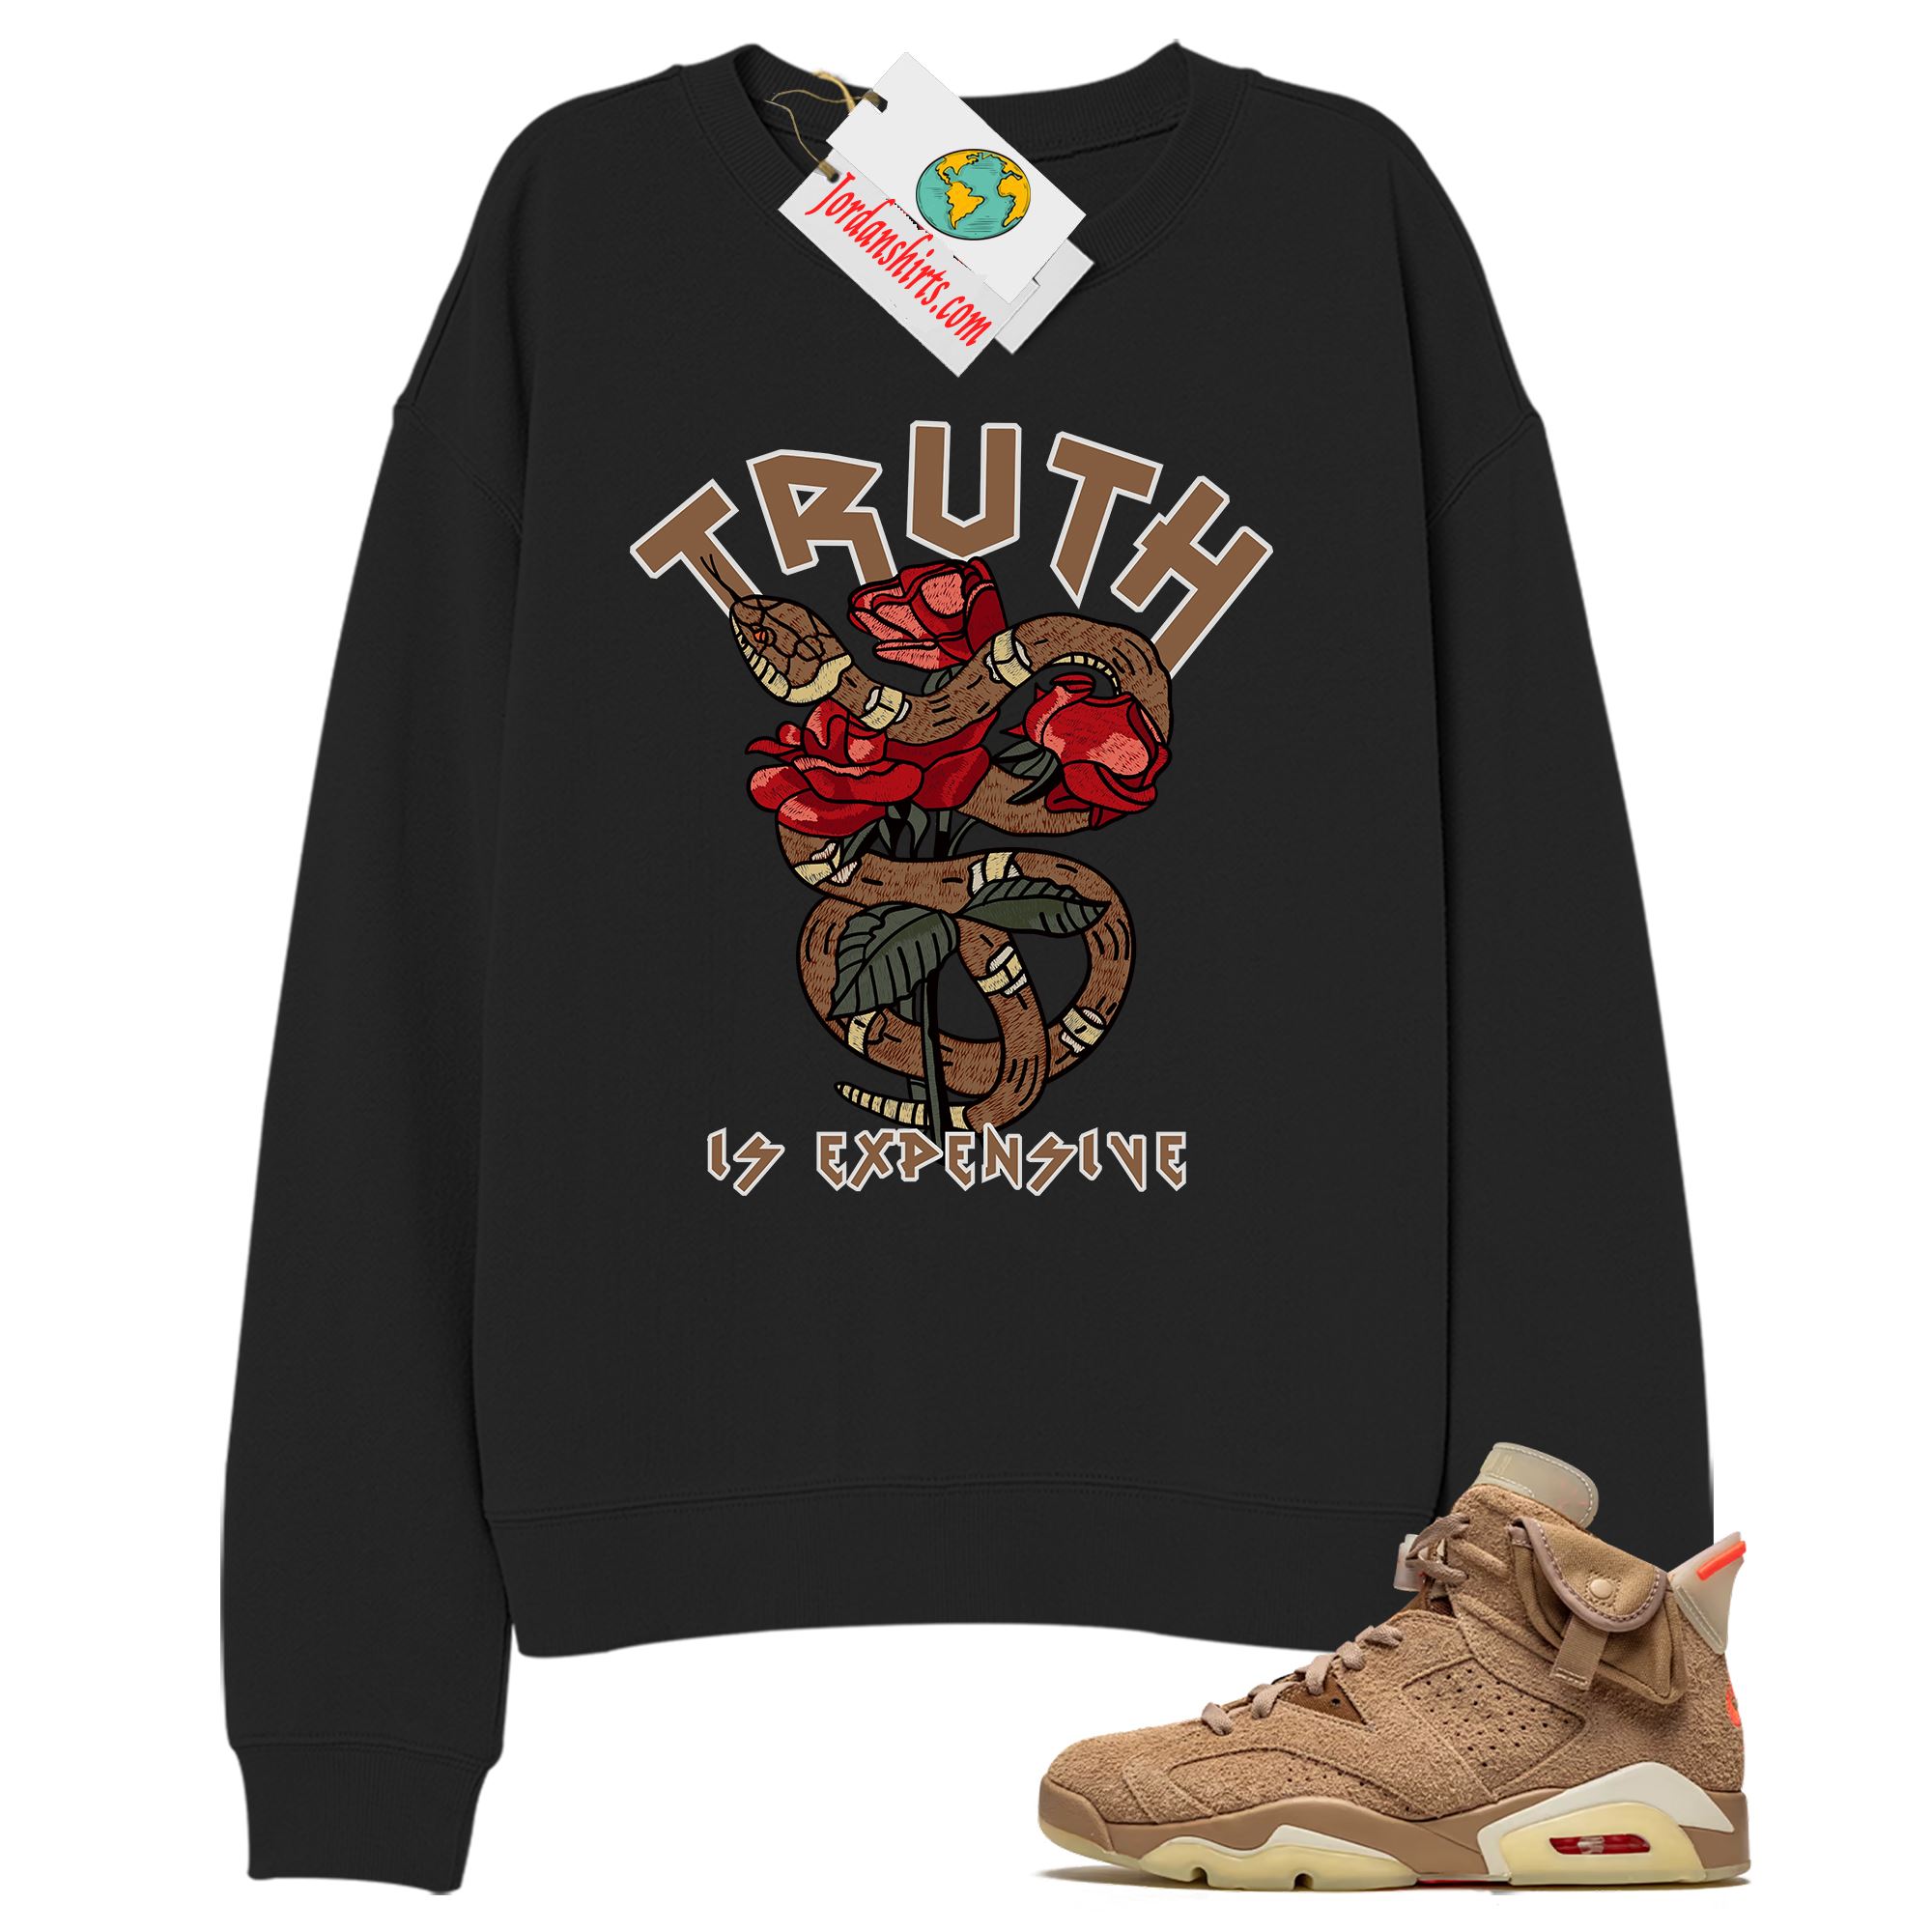 Jordan 6 Sweatshirt, Truth Is Expensive Snake Black Sweatshirt Air Jordan 6 Travis Scott 6s Plus Size Up To 5xl